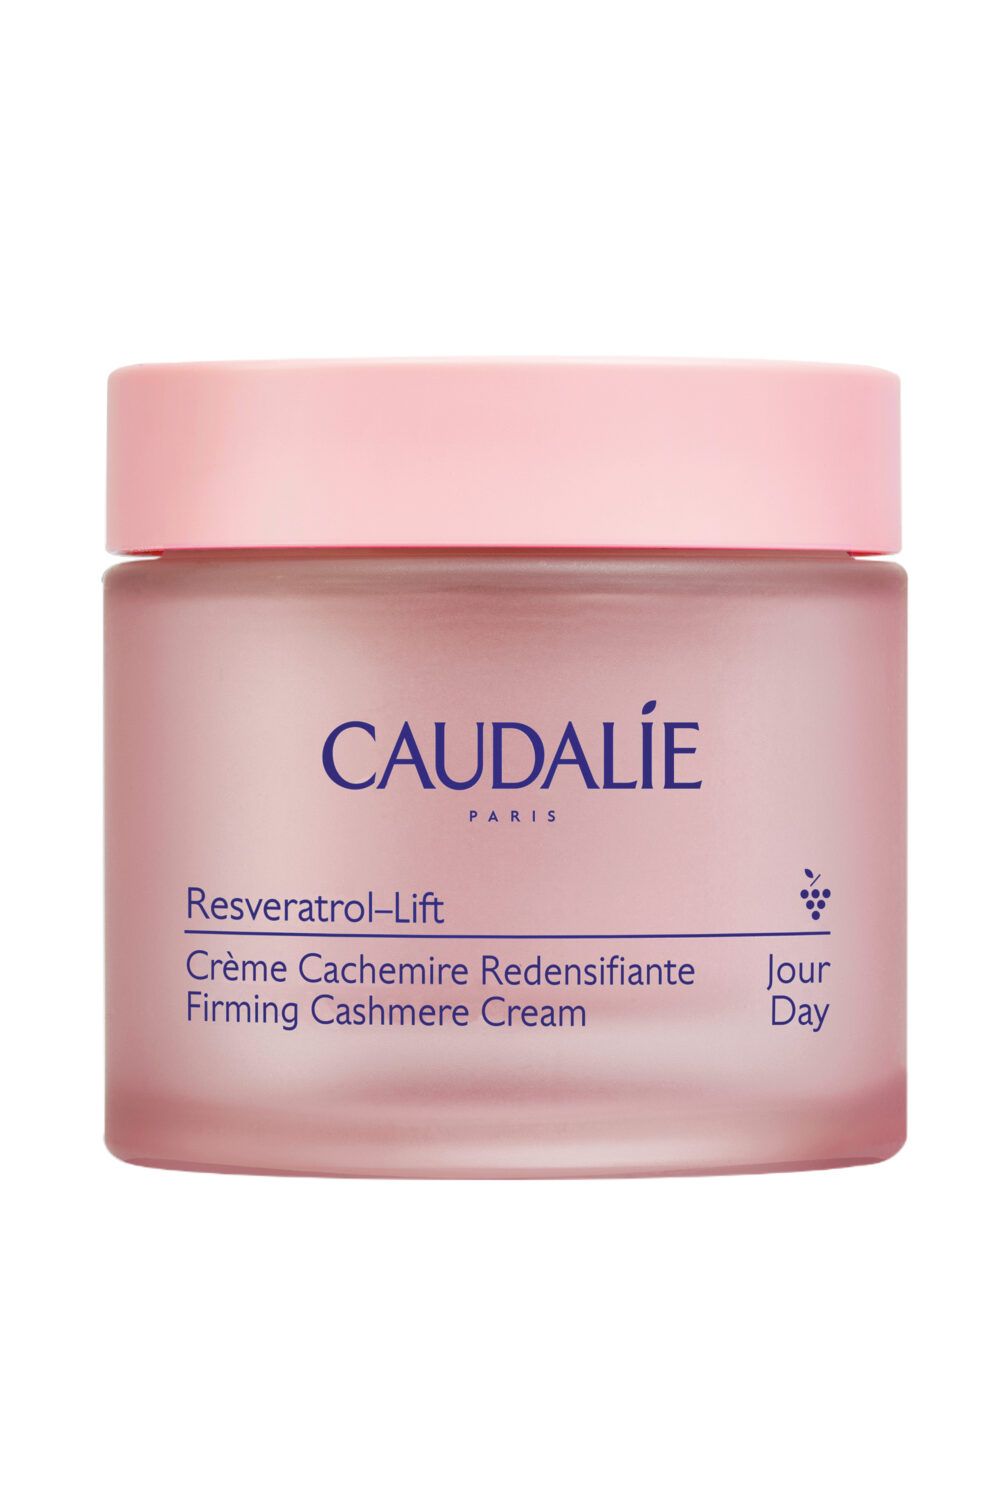 Caudalie - Crème Cachemire Redensifiante Resveratrol rechargeable 50ml